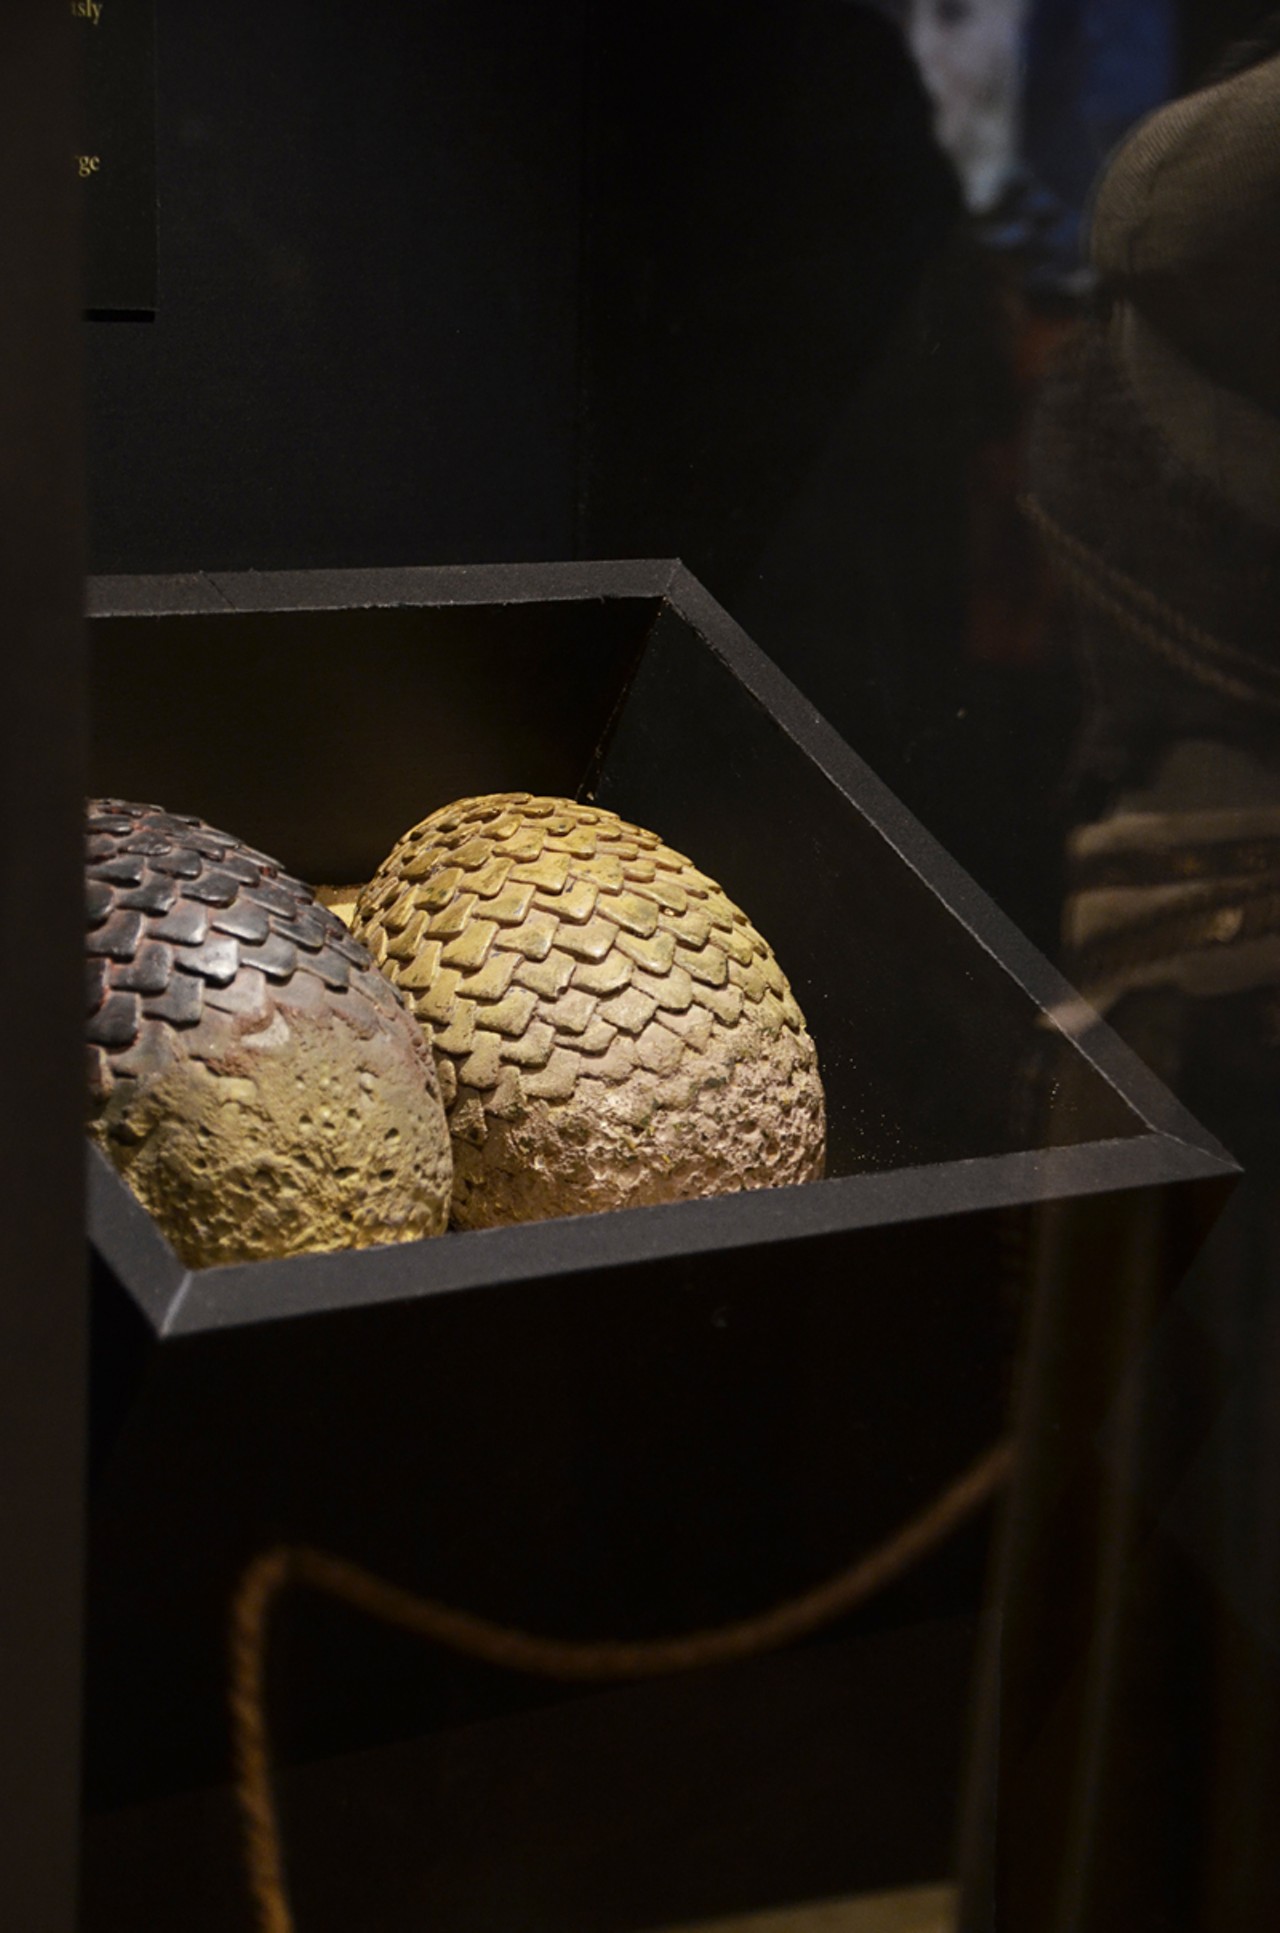 Daenerys Targaryen's dragon eggs are displayed.